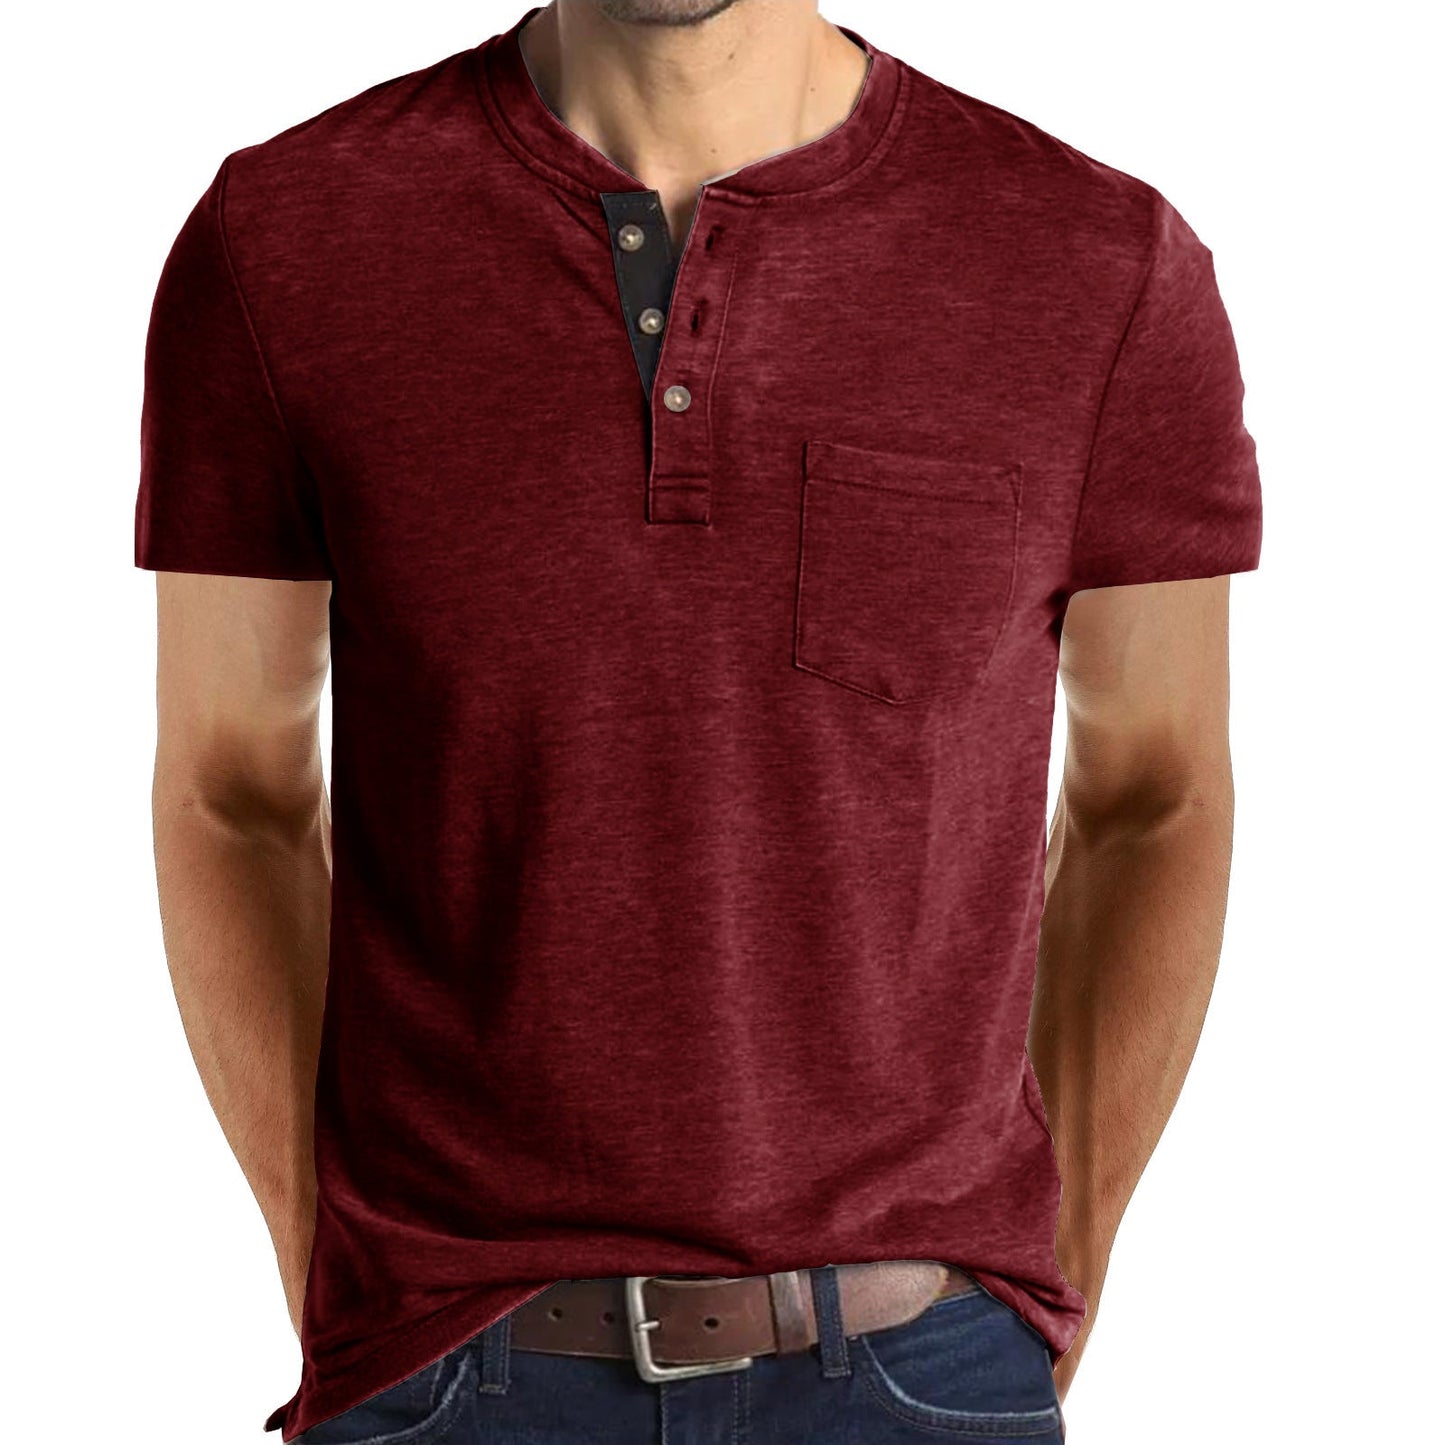 Casual Summer Short Sleeves Men T Shirts-Shirts-Wine Red-S-Free Shipping at meselling99